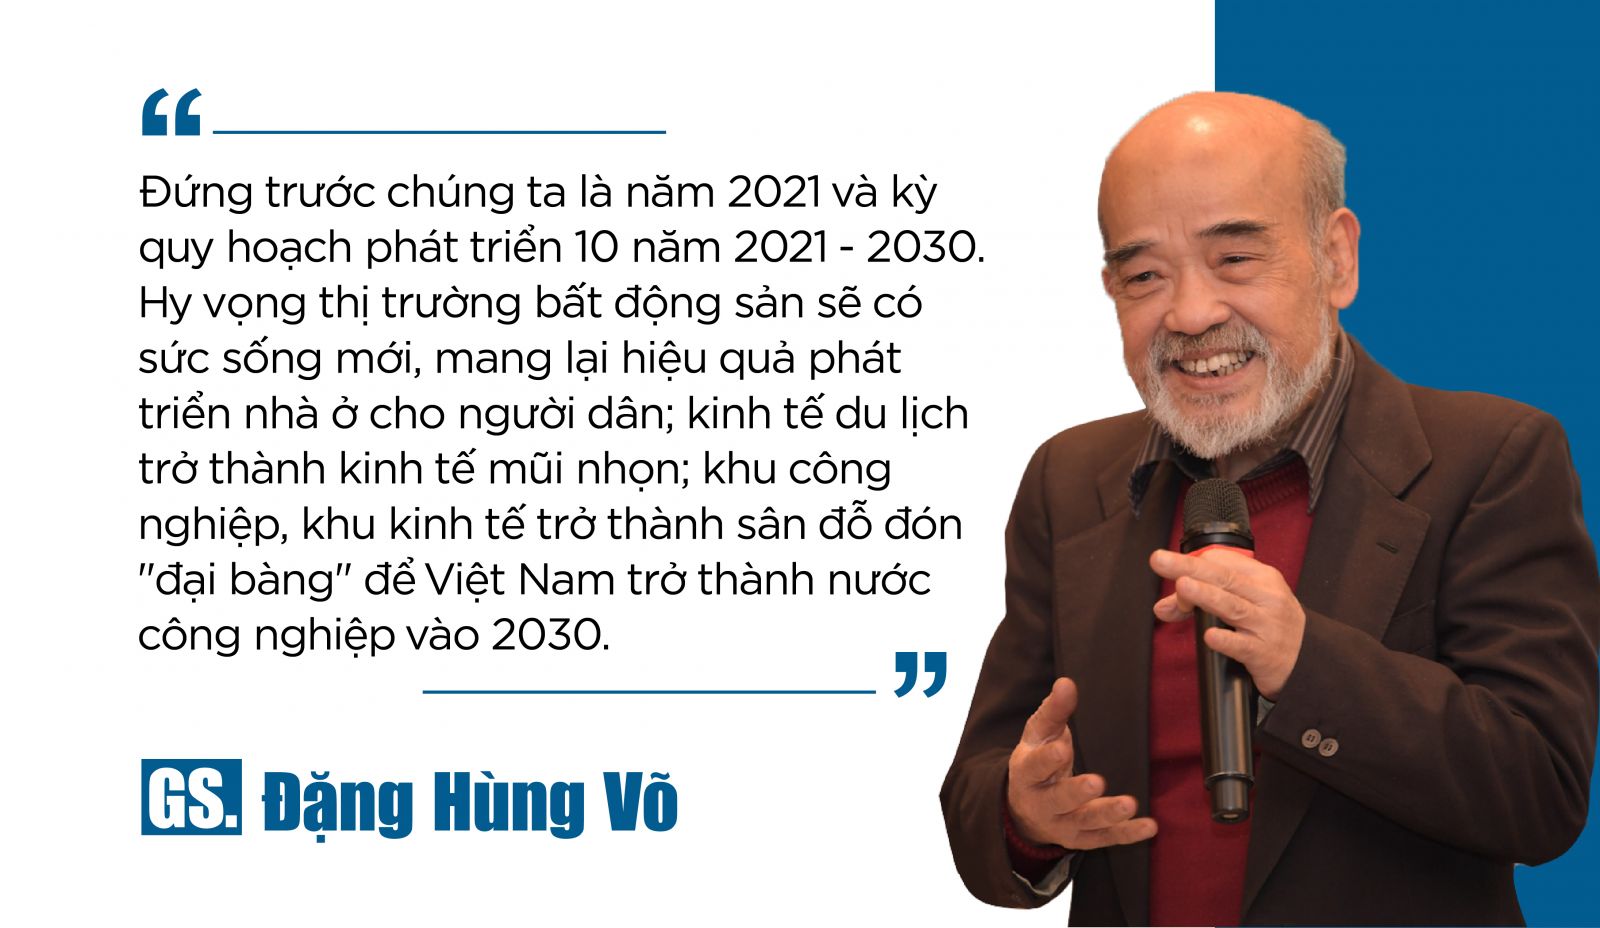 GS Dang Hung Vo